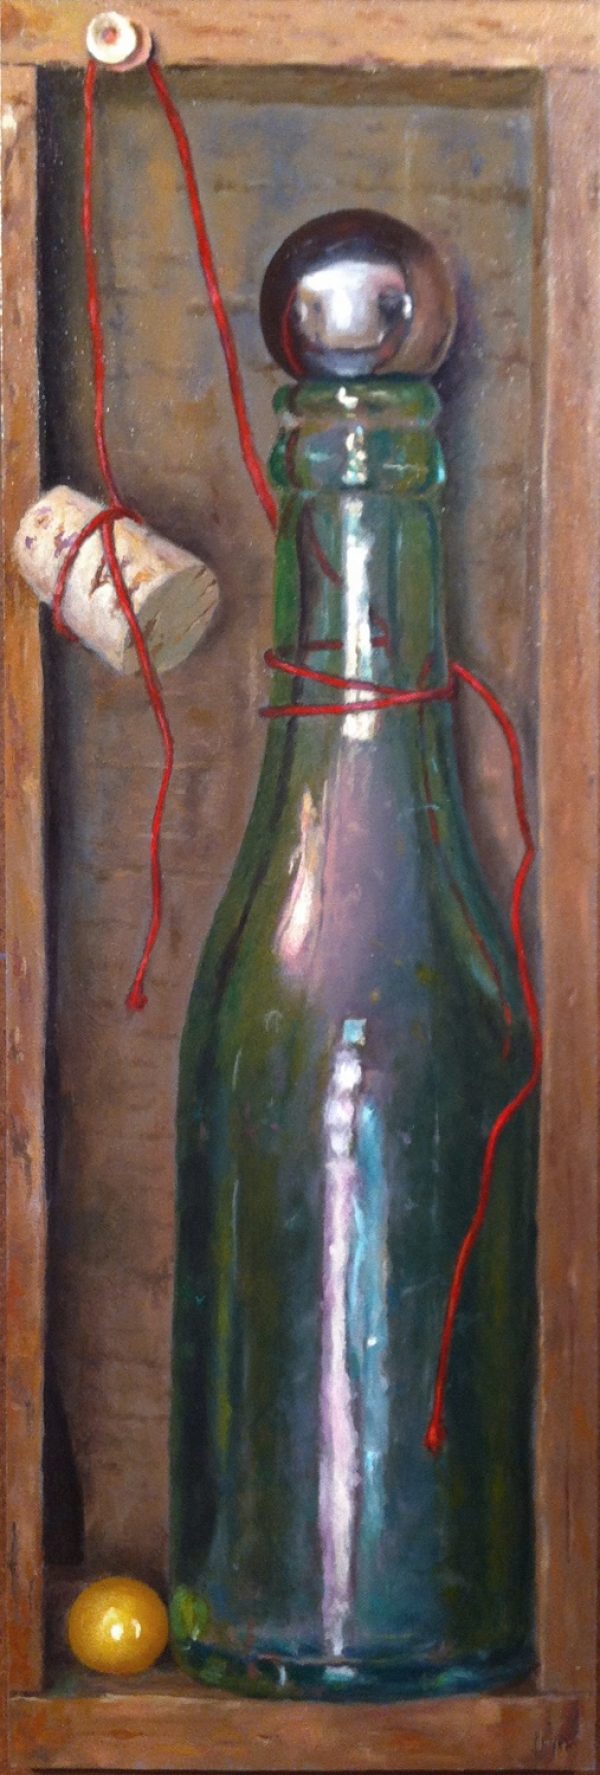 "Boxed Bottle", oil, 15x5, $1450